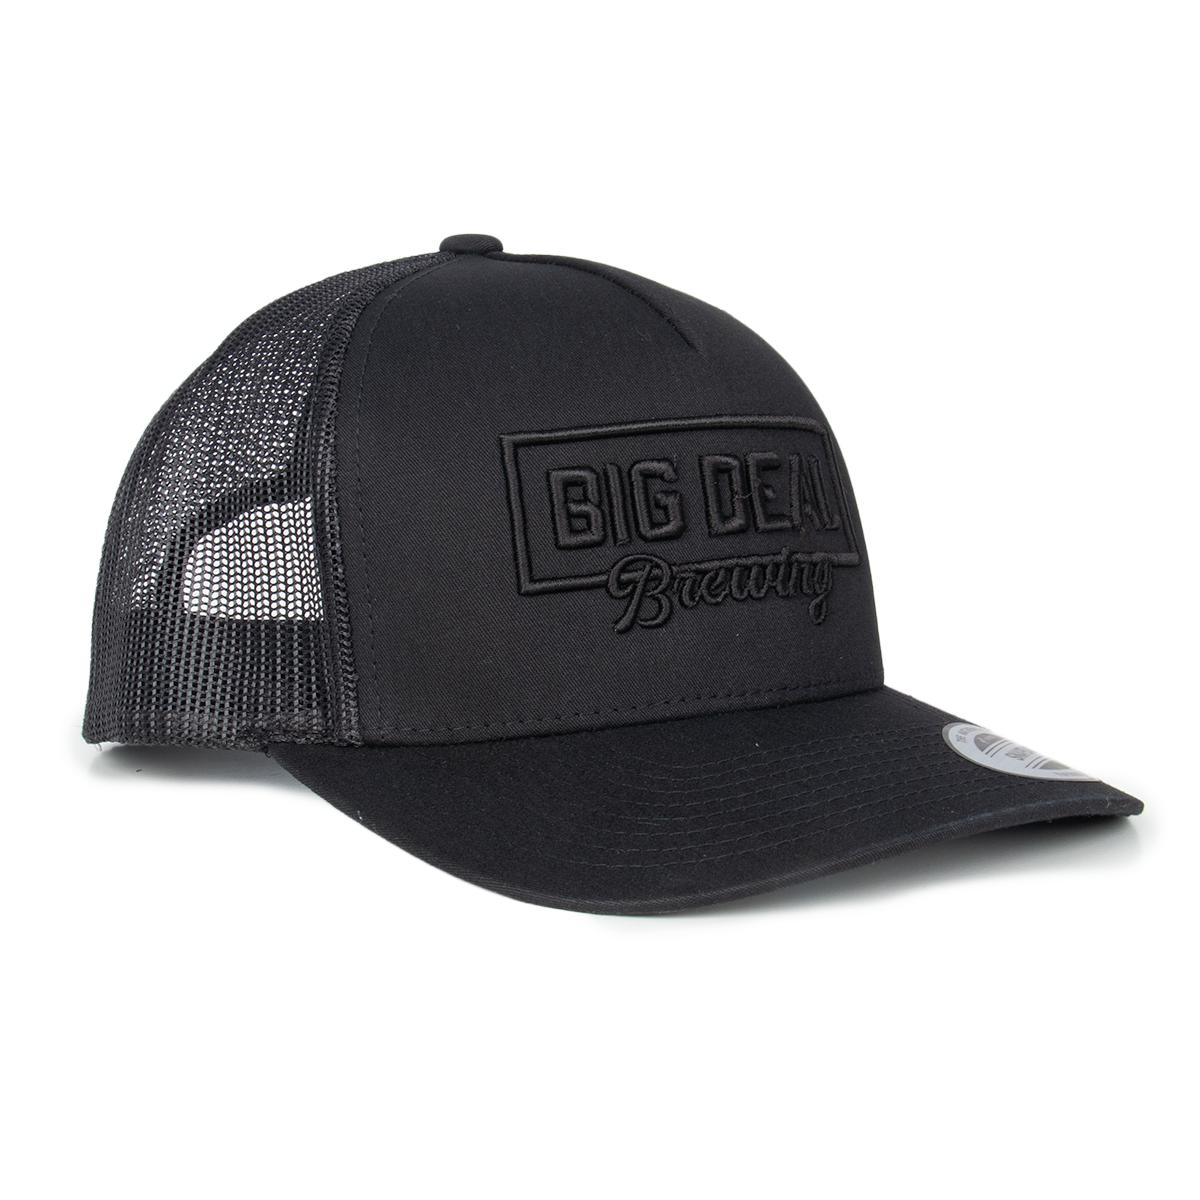 Big Deal Brewing Tonal Trucker Hat-Hats-Big Deal Brewing-Black-One Size-Barstool Sports